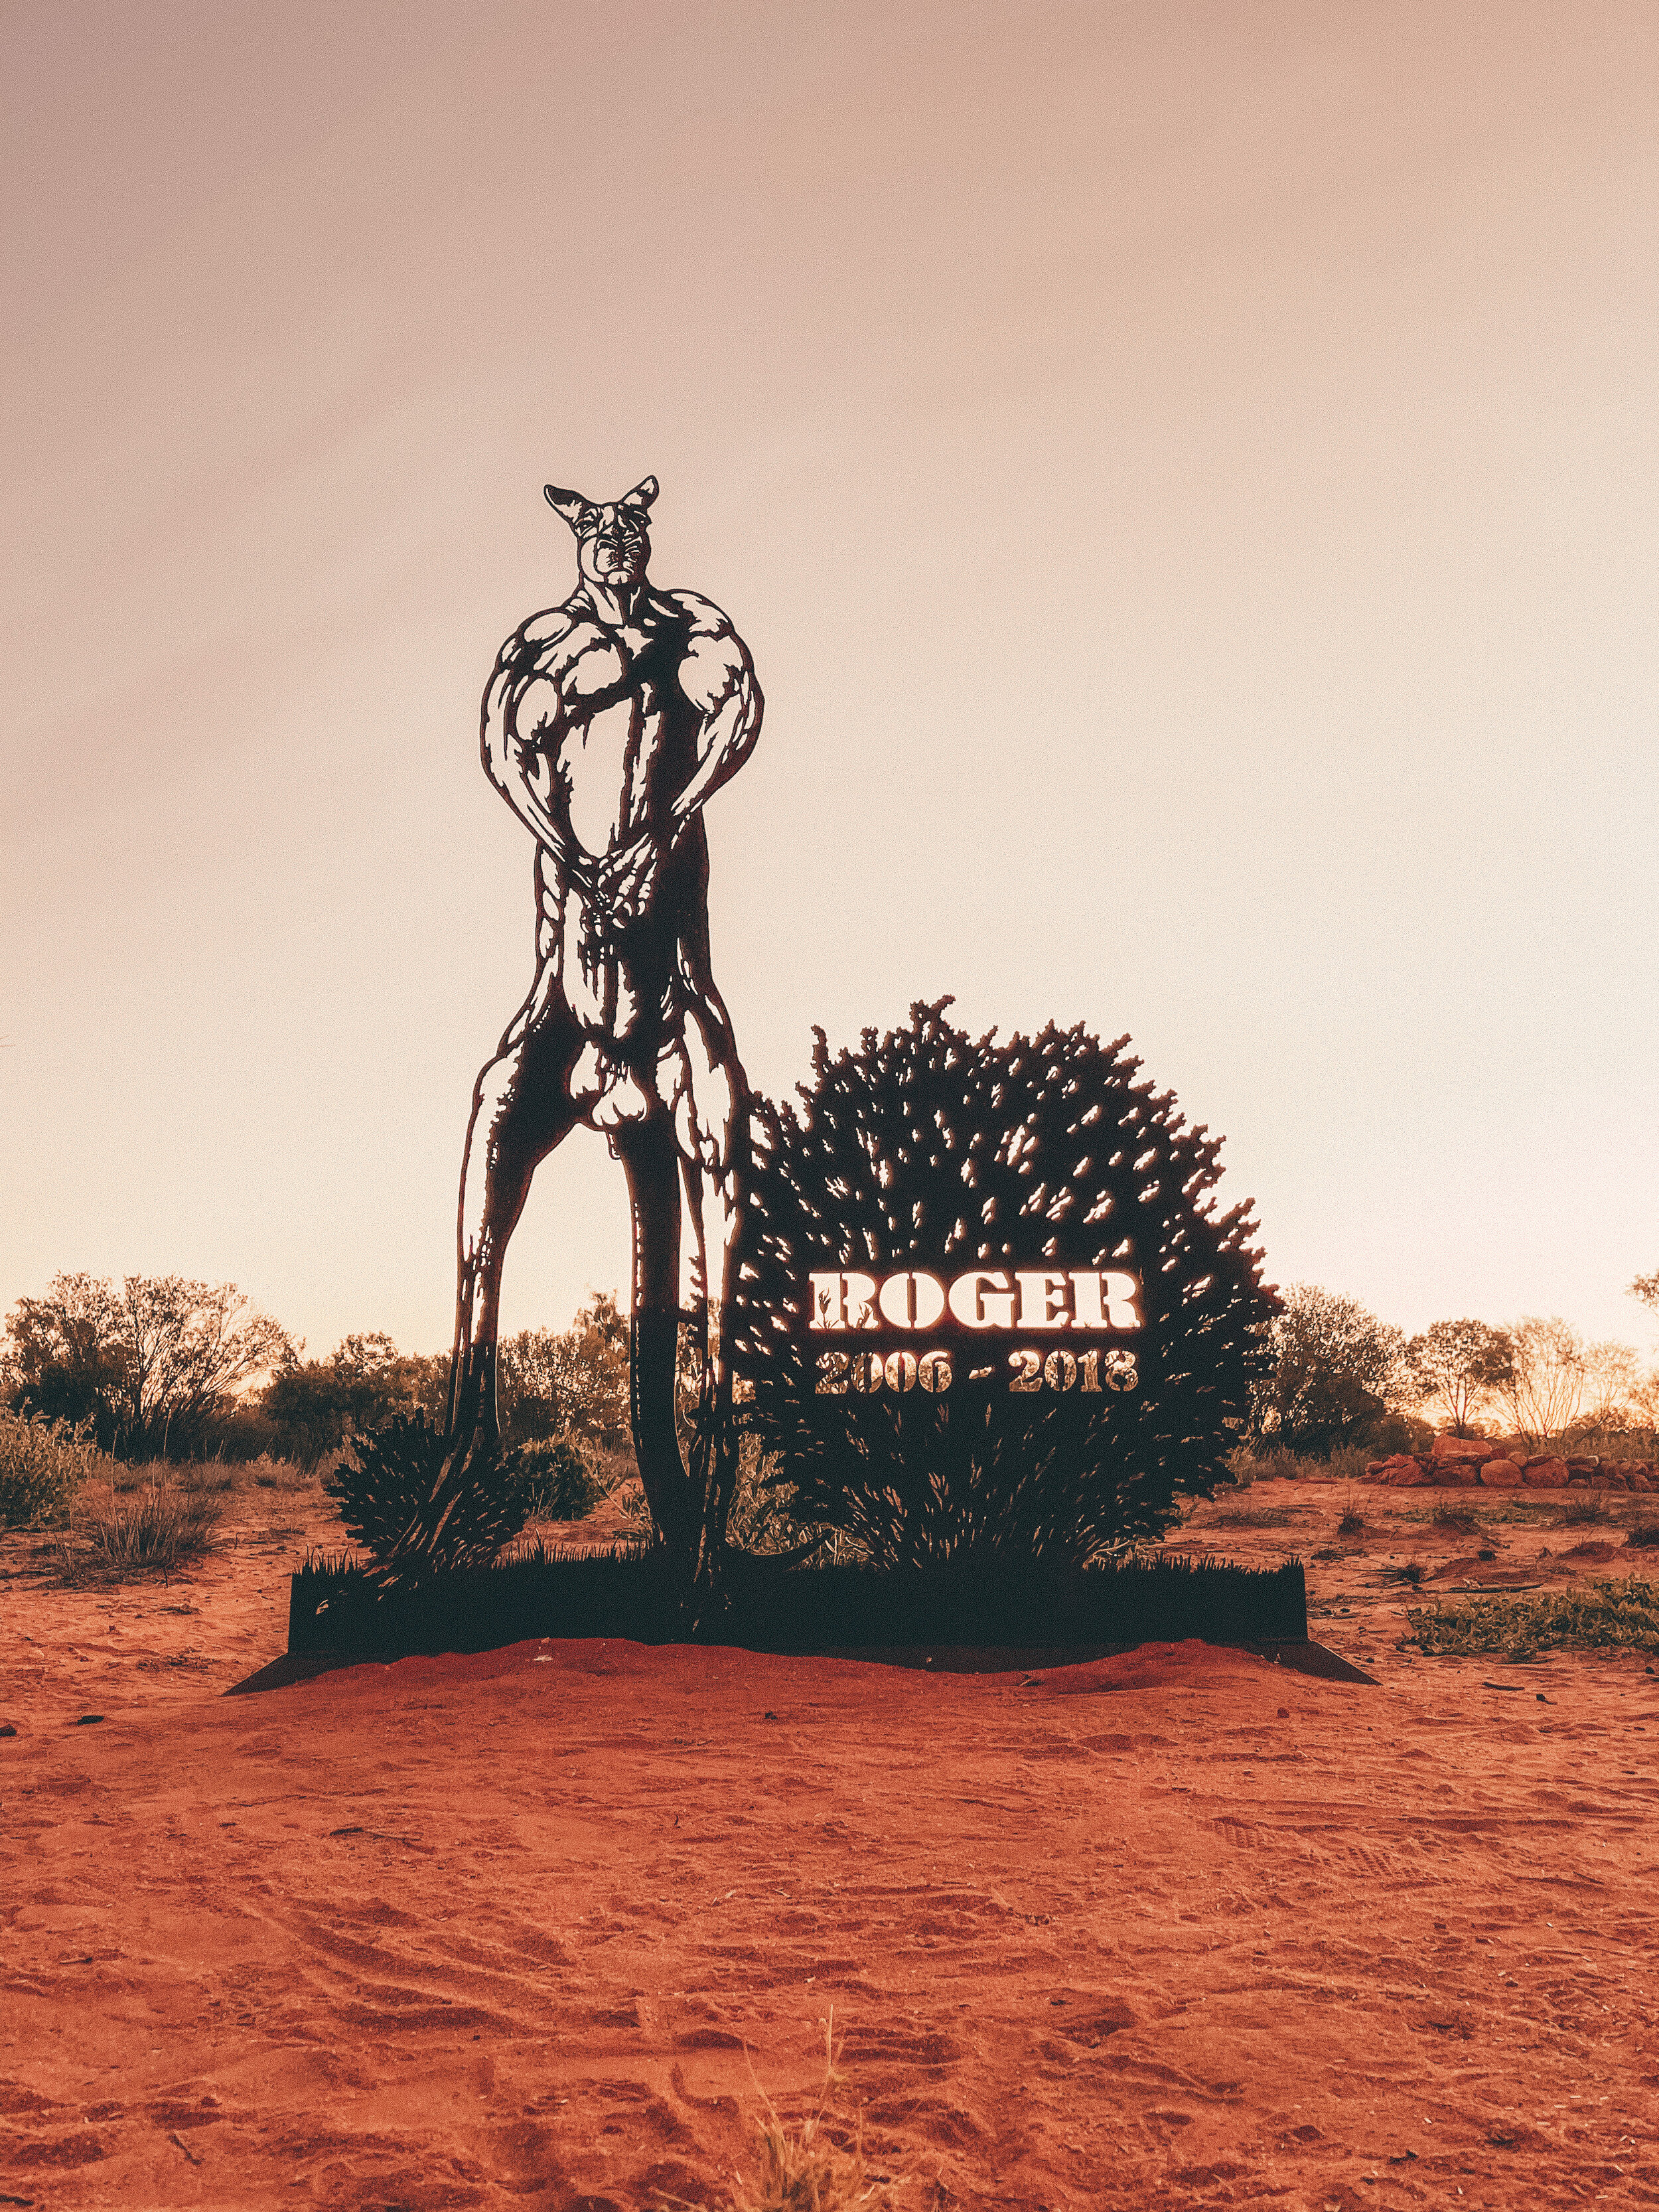 RIP Roger - The Kangaroo Sanctuary - Alice Springs - Northern Territory - Australia